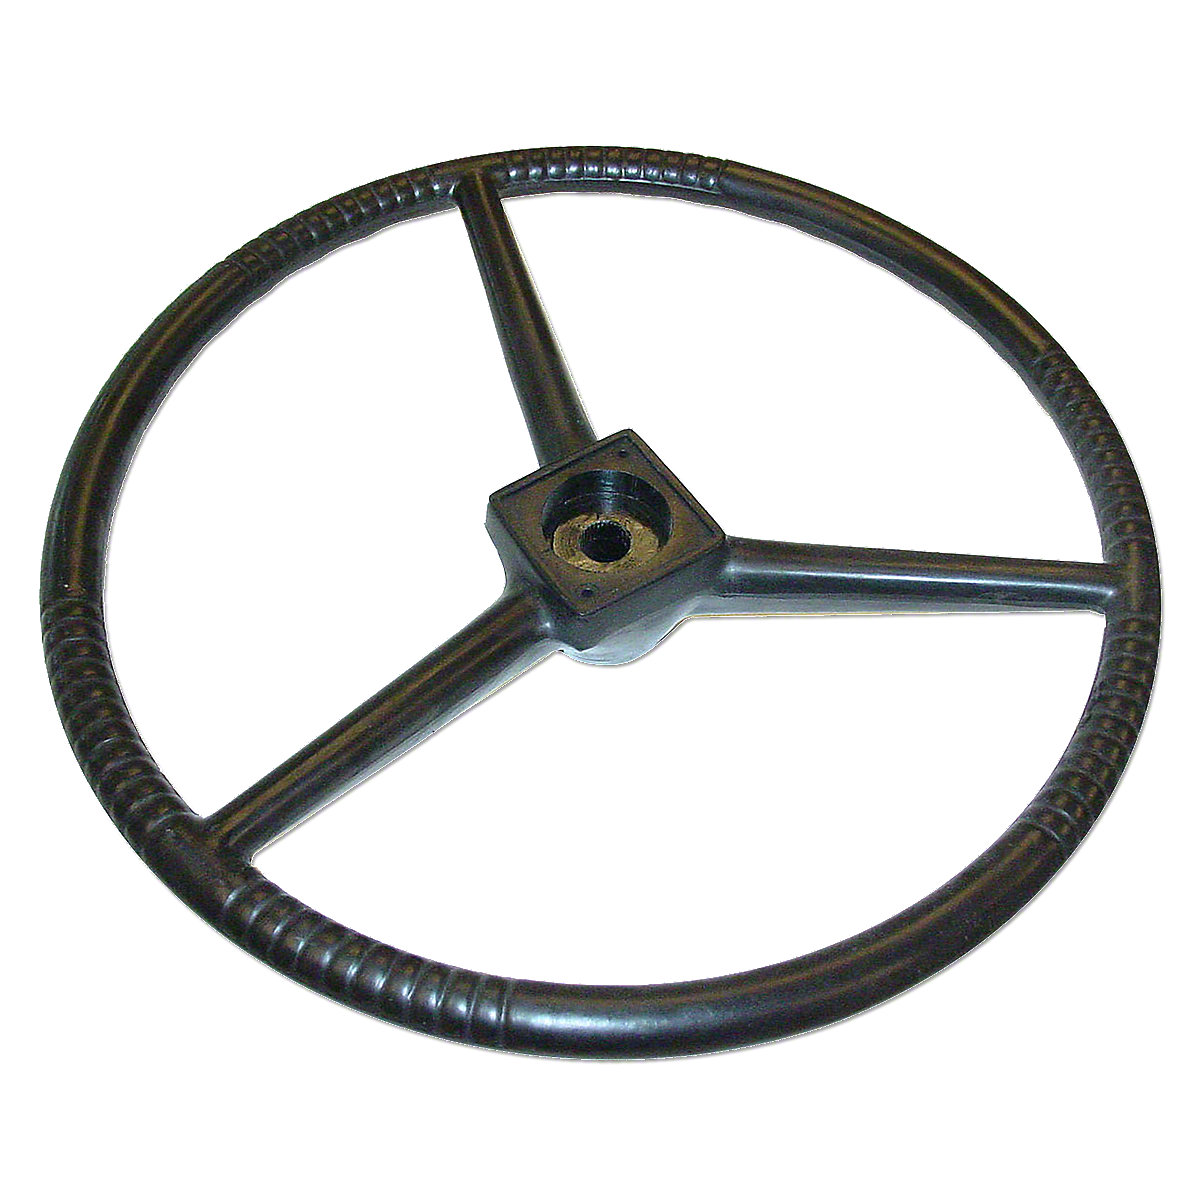 Acs134 17 12 3 Spoke Steering Wheel For Allis Chalmers D10 D12